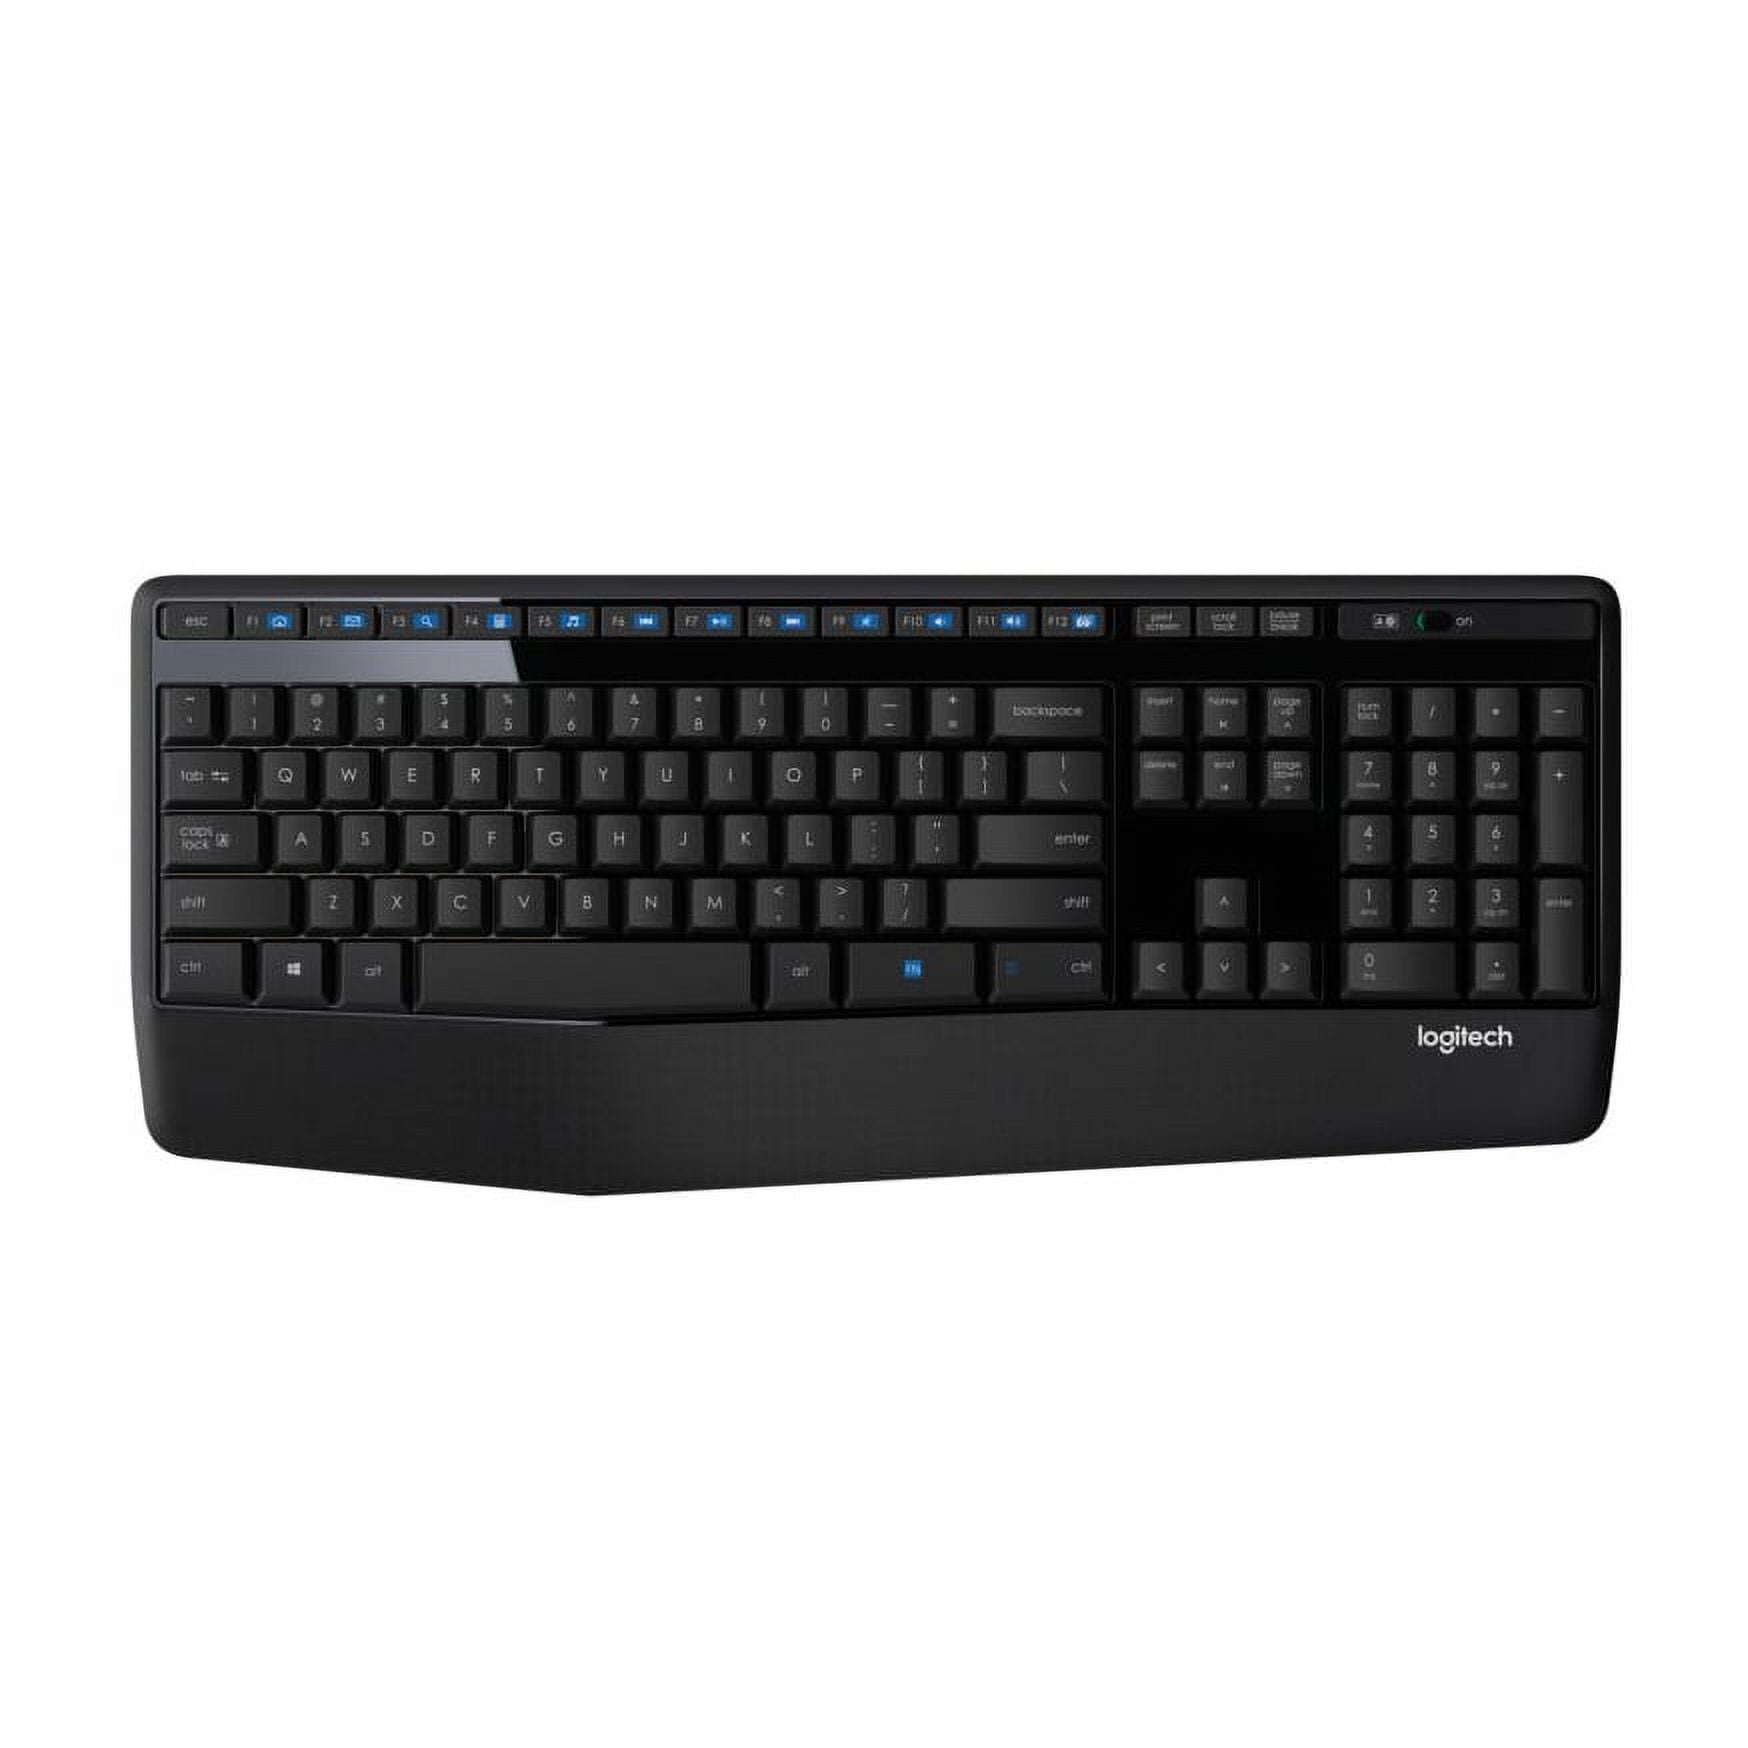 XLSee Large Print Keyboard- White on Black 